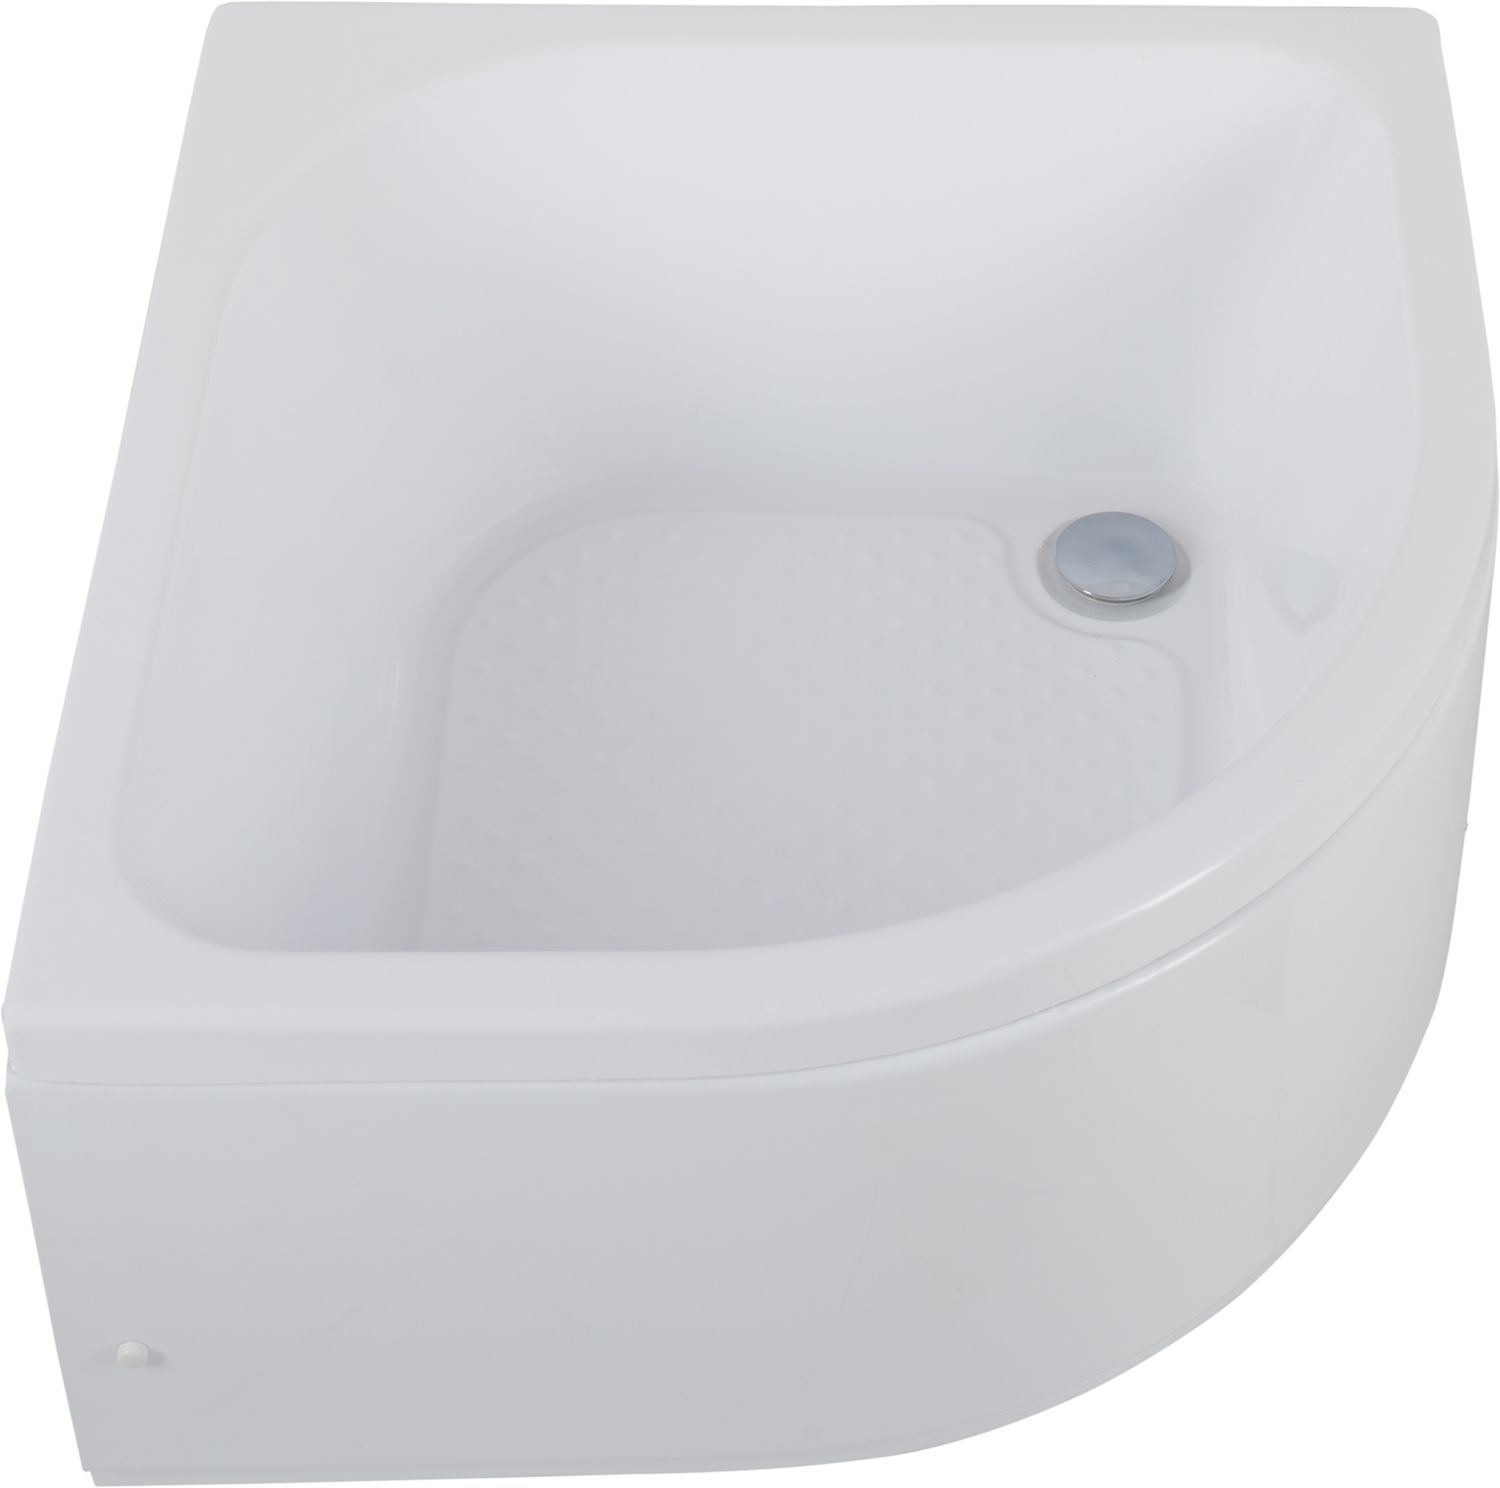 Душевой поддон Aquanet Optimal 90х90 глубокий туалет глубокий с сеткой 36 х 25 х 9 см белый